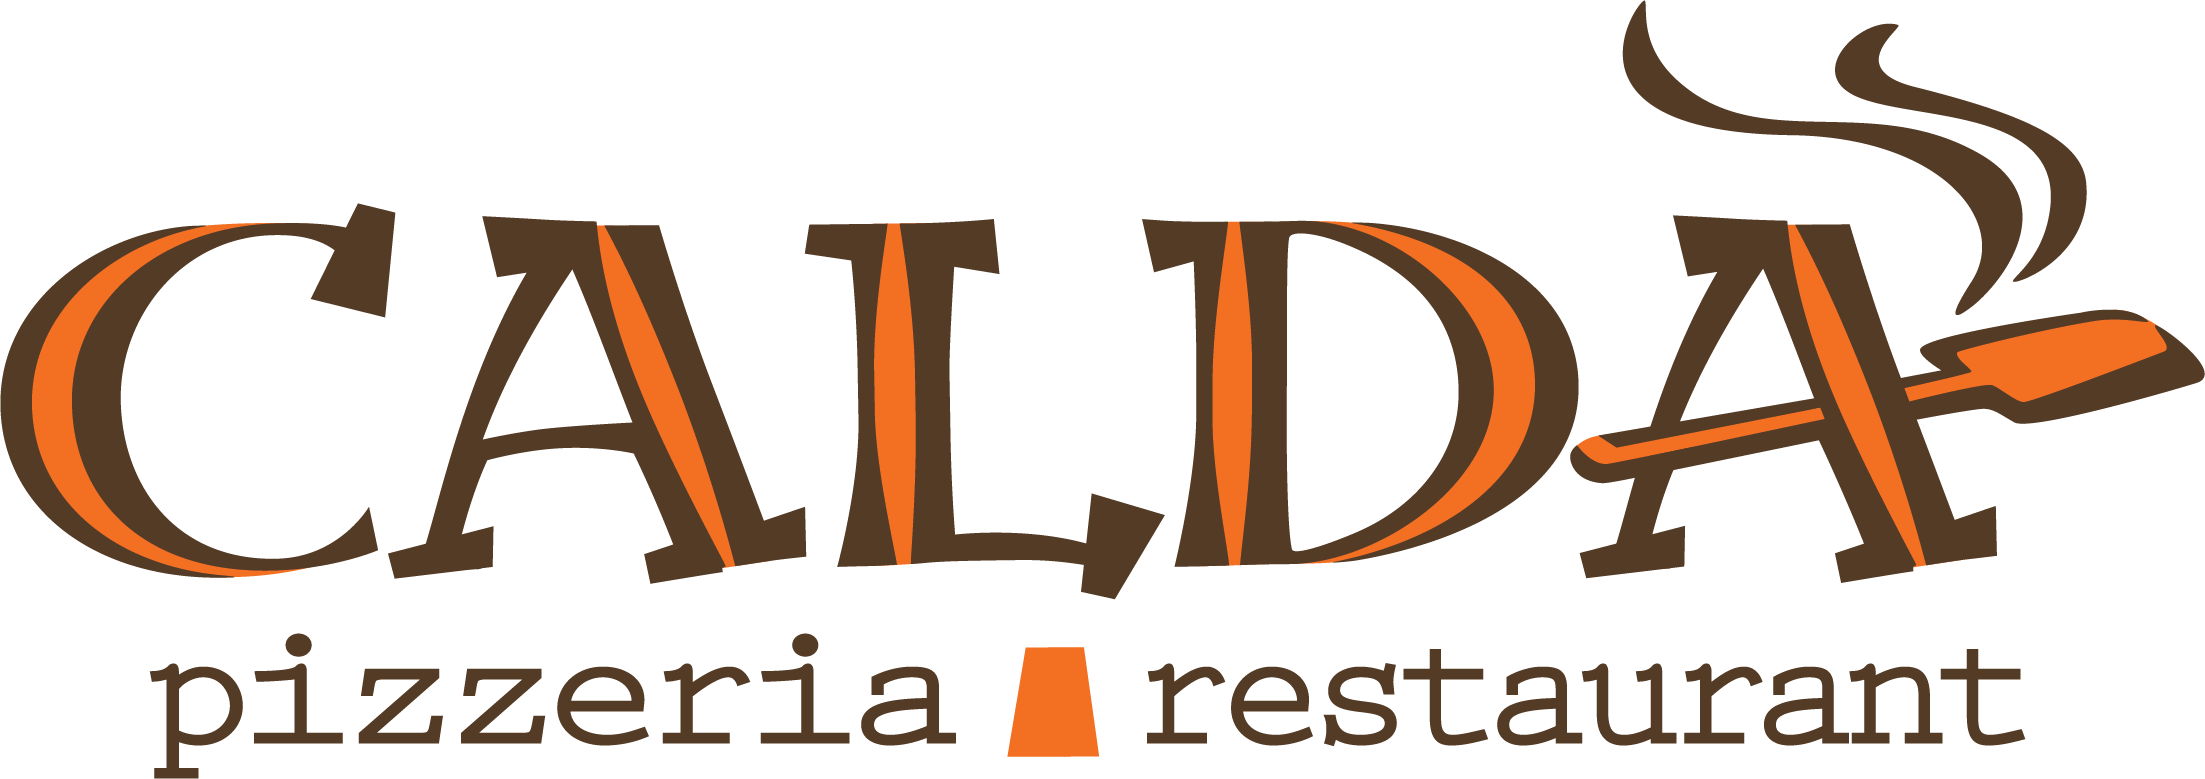 Calda Pizzeria & Restaurant  logo